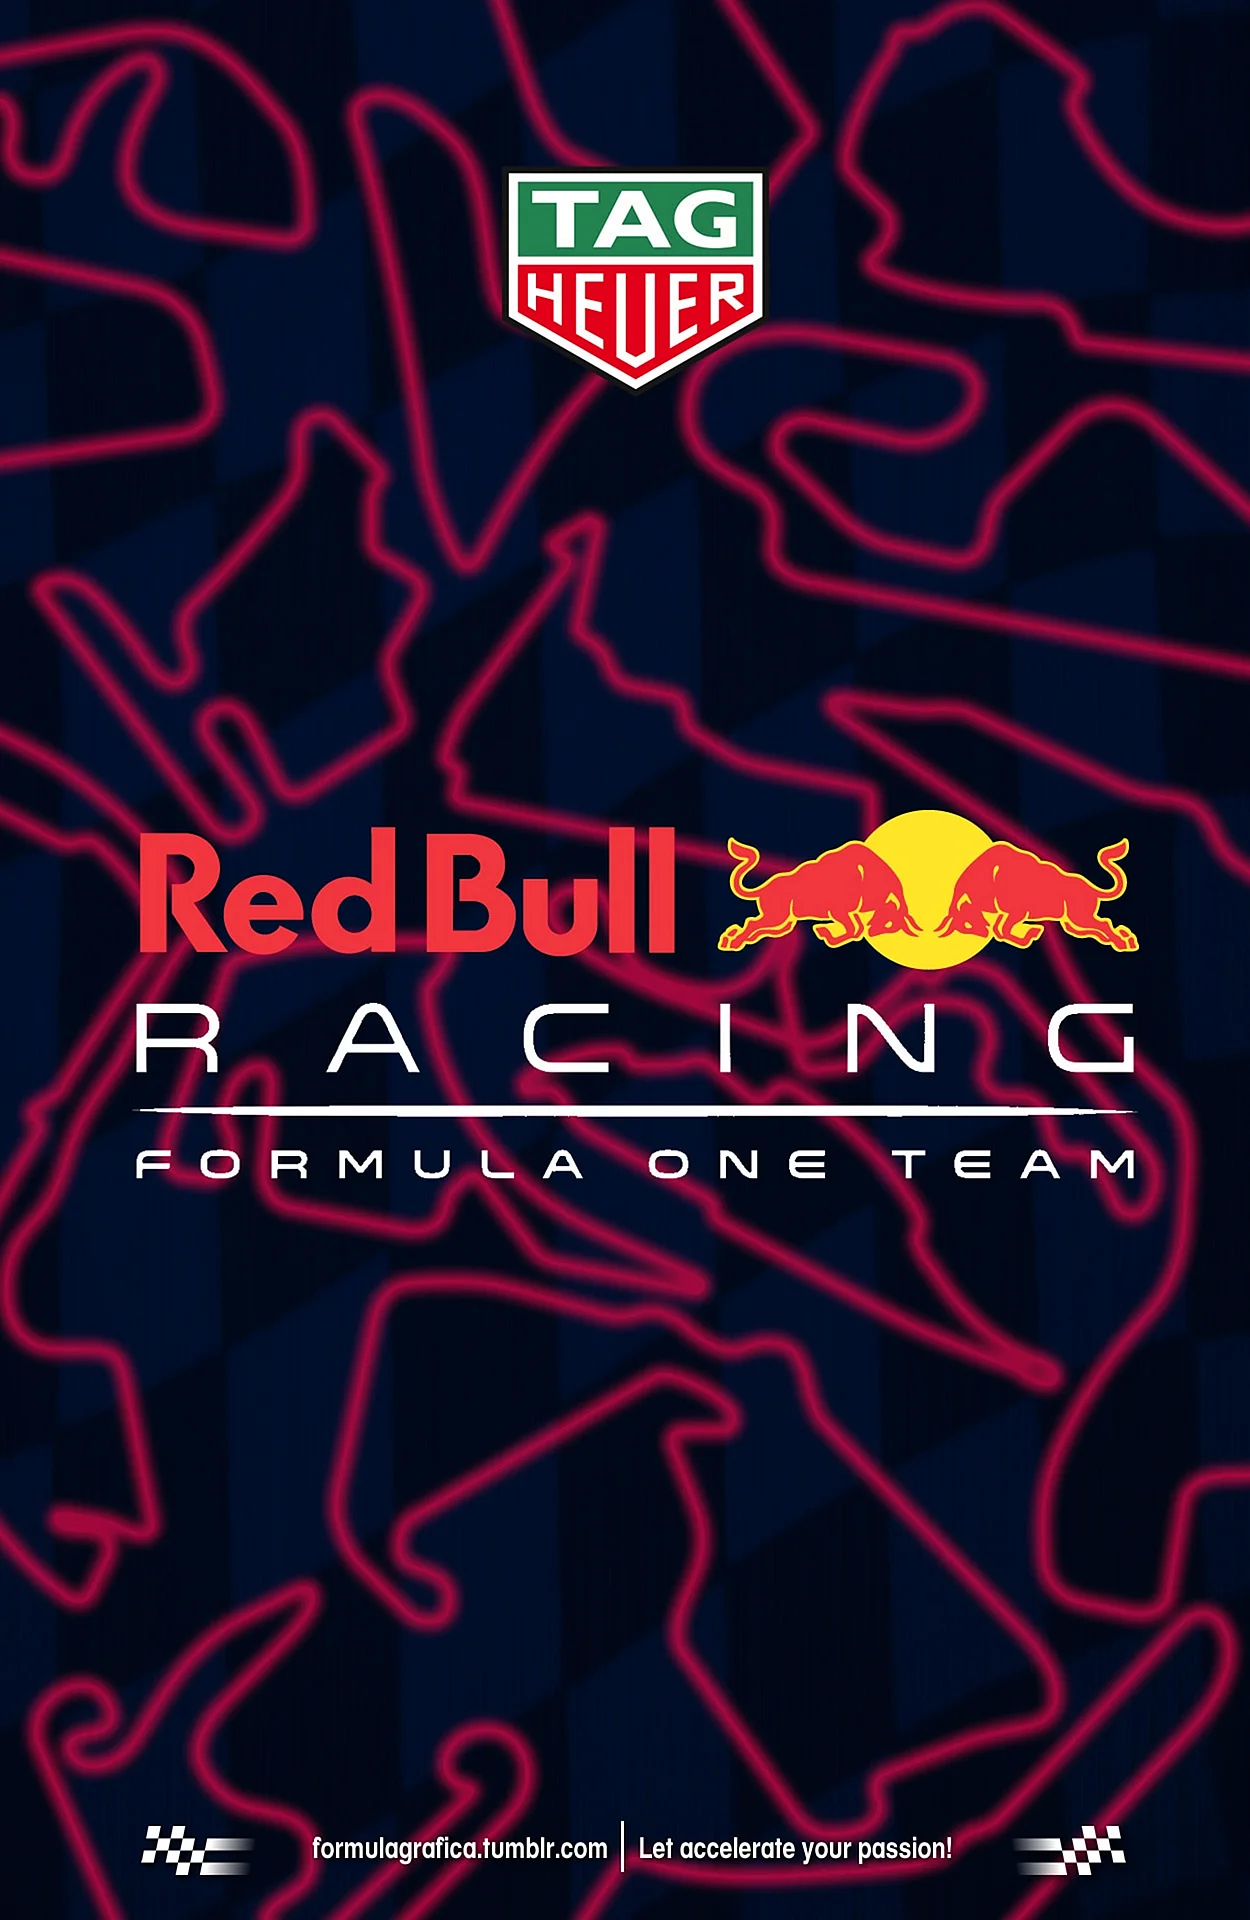 Red Bull F1 Logo Wallpaper For iPhone